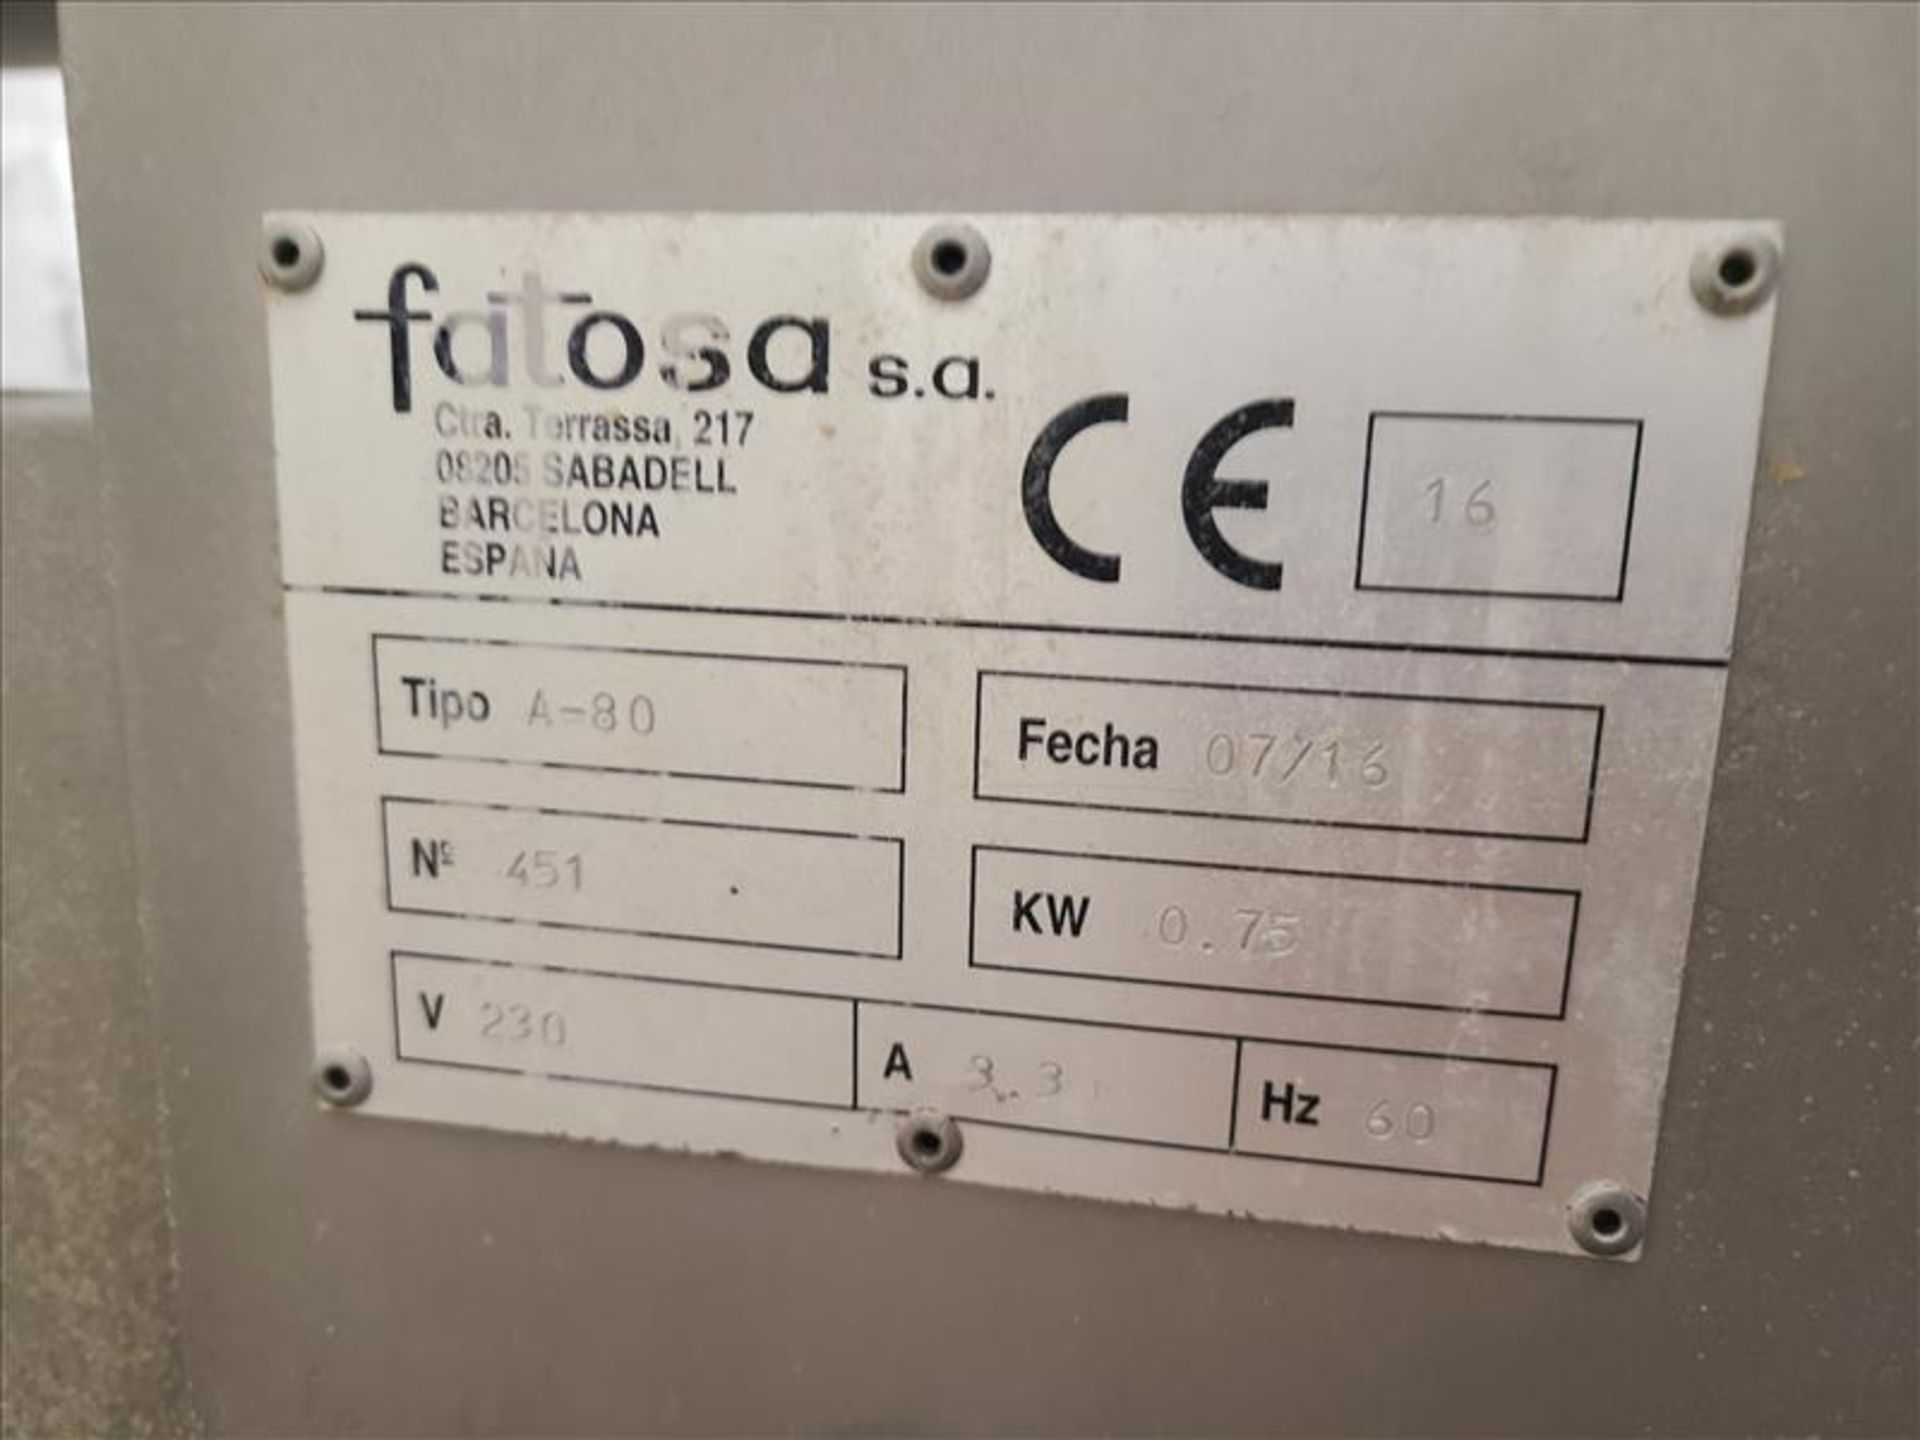 Fatosa Kneader Mixer, mod. A-80, ser. no. 451, 230 volts, 60 Hz (2016) [Line 4-Extrusion Room] - Image 4 of 4